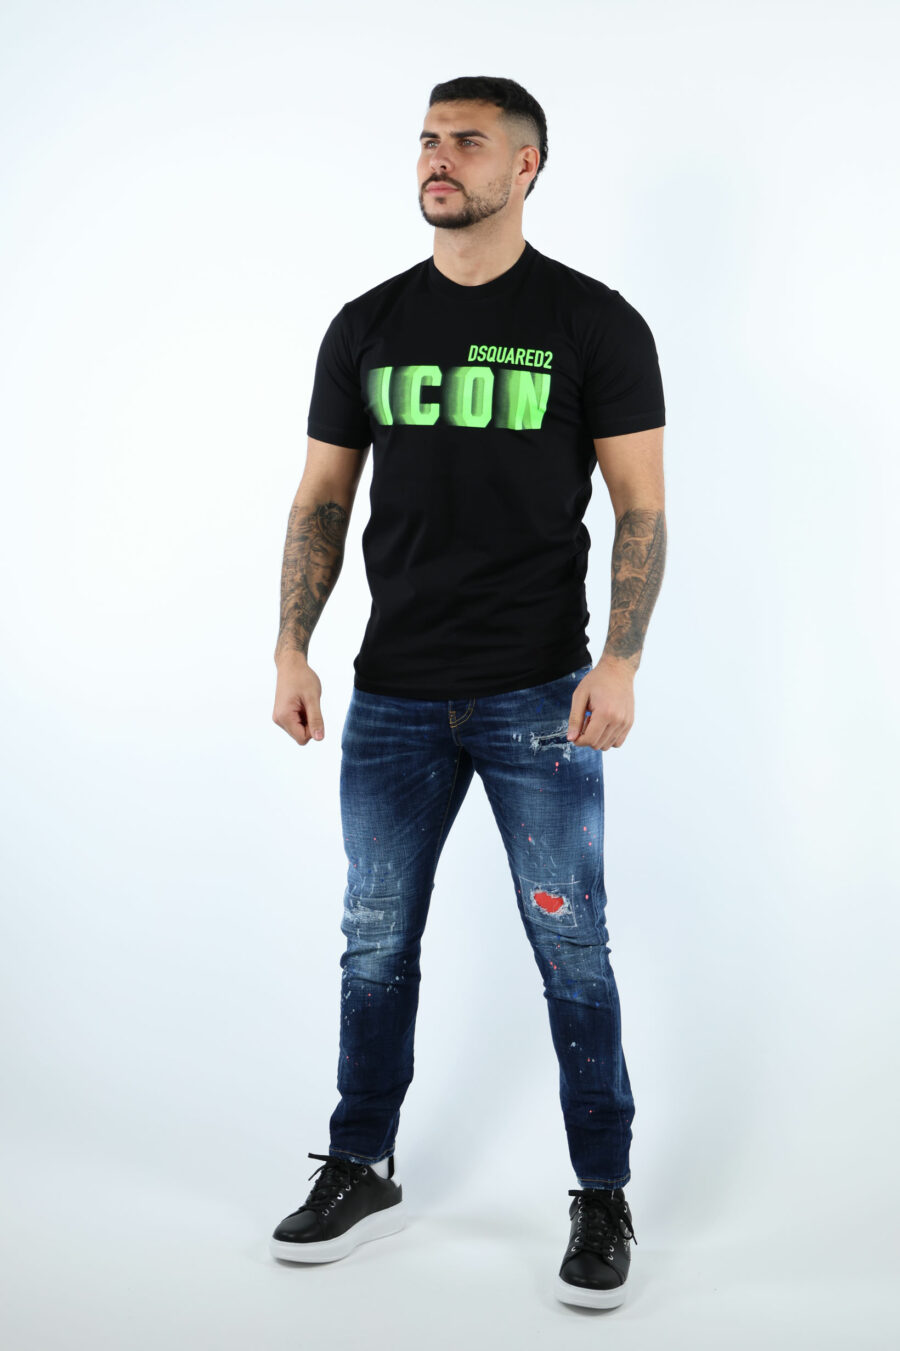 Schwarzes T-Shirt mit neongrünem unscharfem "Icon" Maxilogo - 106920